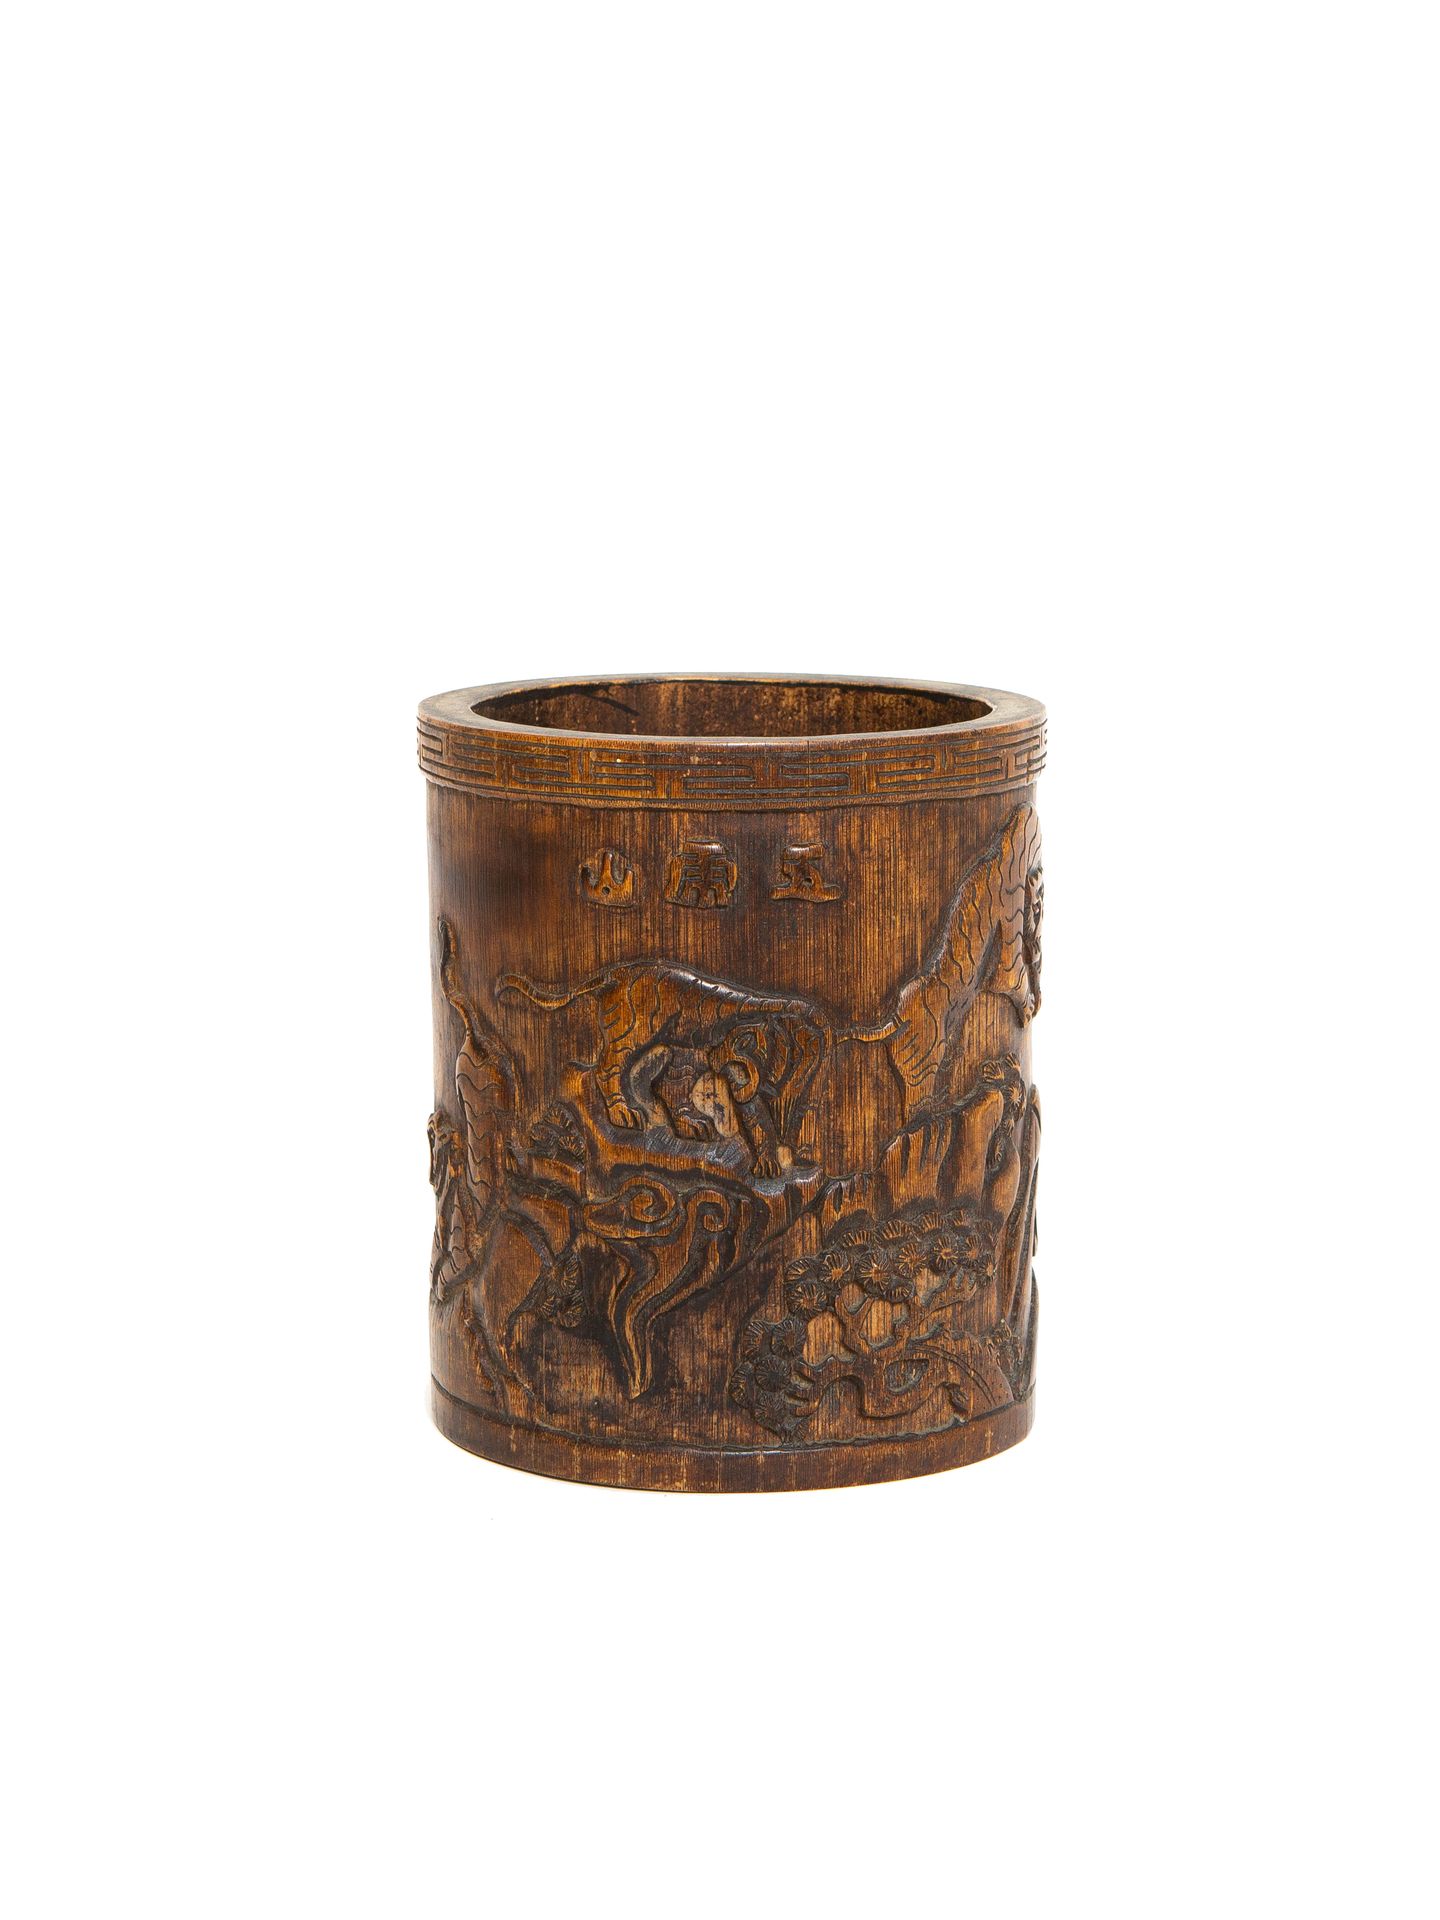 Null 中国，19-20世纪

雕刻的竹刷壶，其装饰显示老虎在河边的岩石上。有三个字的浮雕装饰铭文，提到了装饰中的场景位置

H.16.5厘米

磨损和轻度裂&hellip;